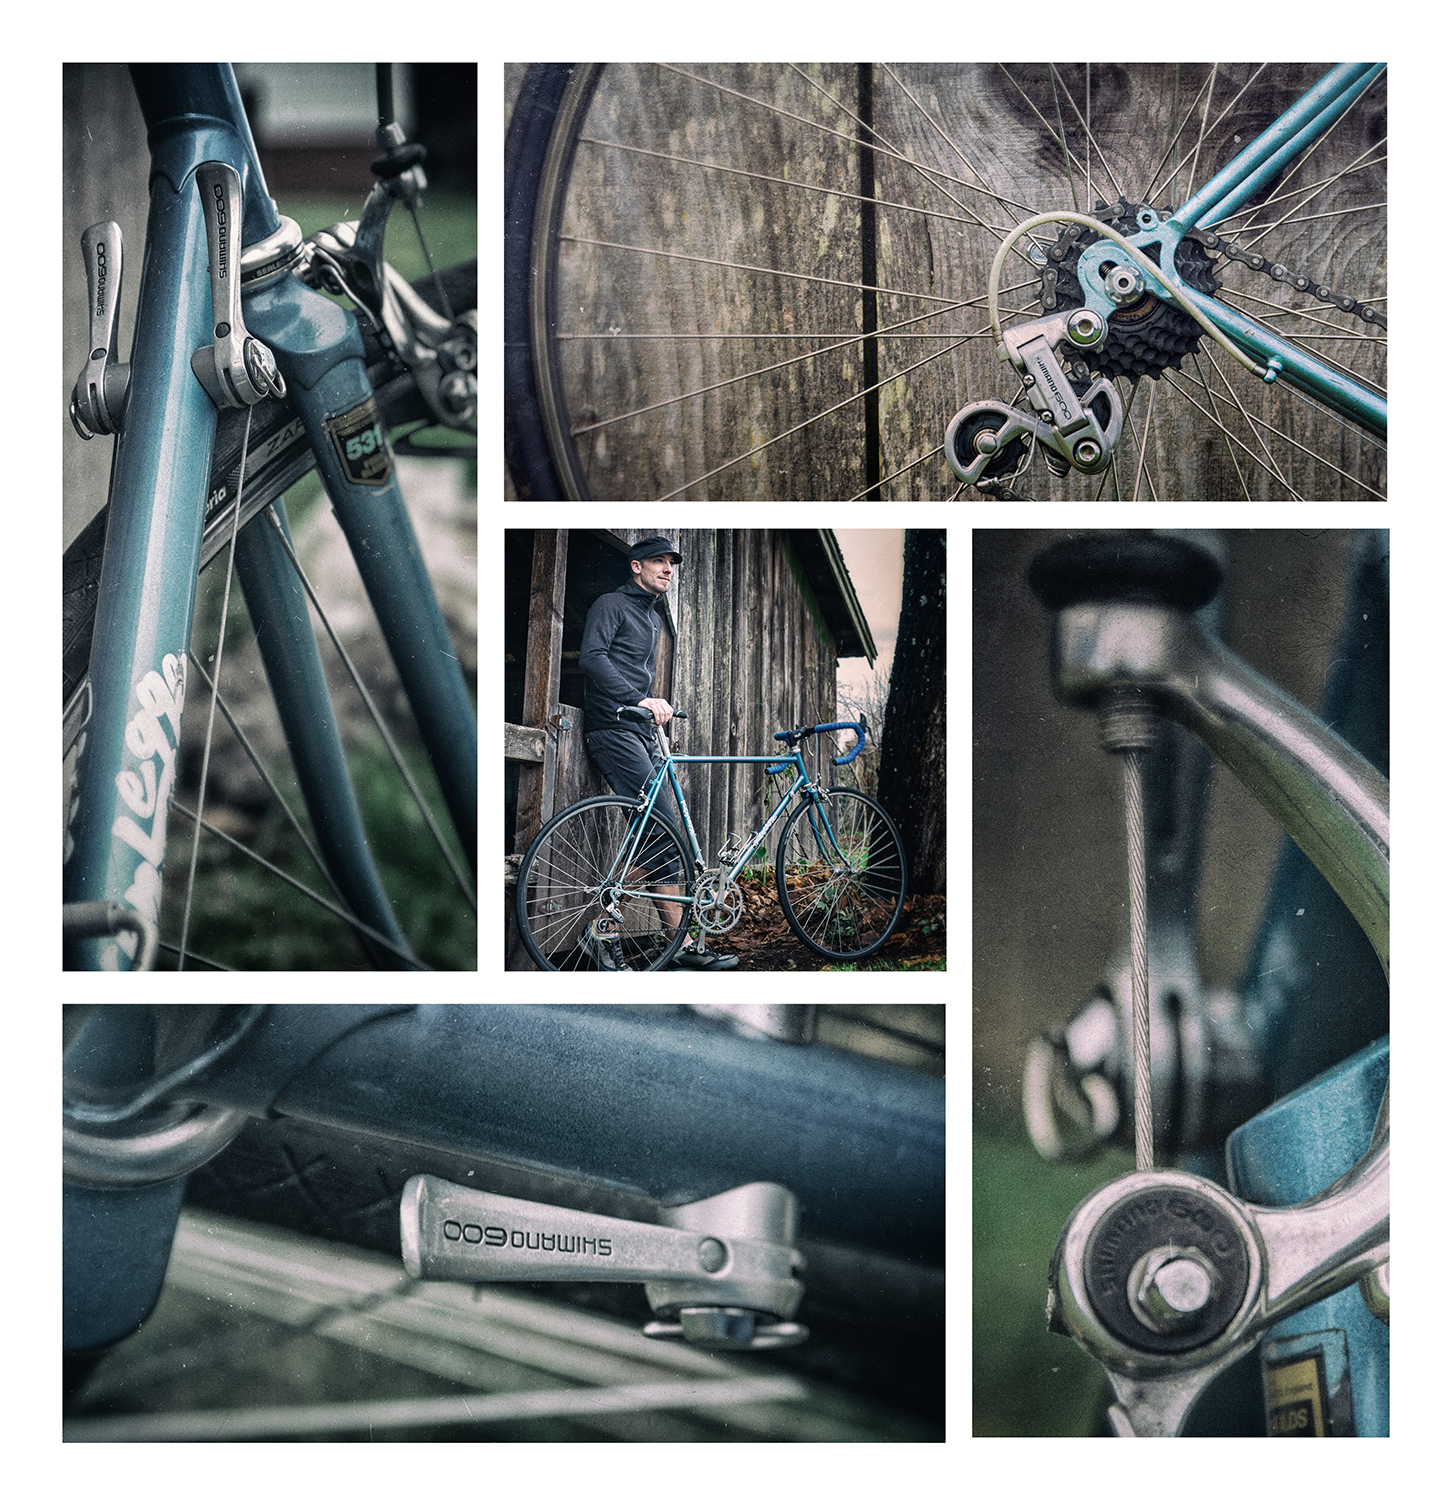 photo montage of bike pics